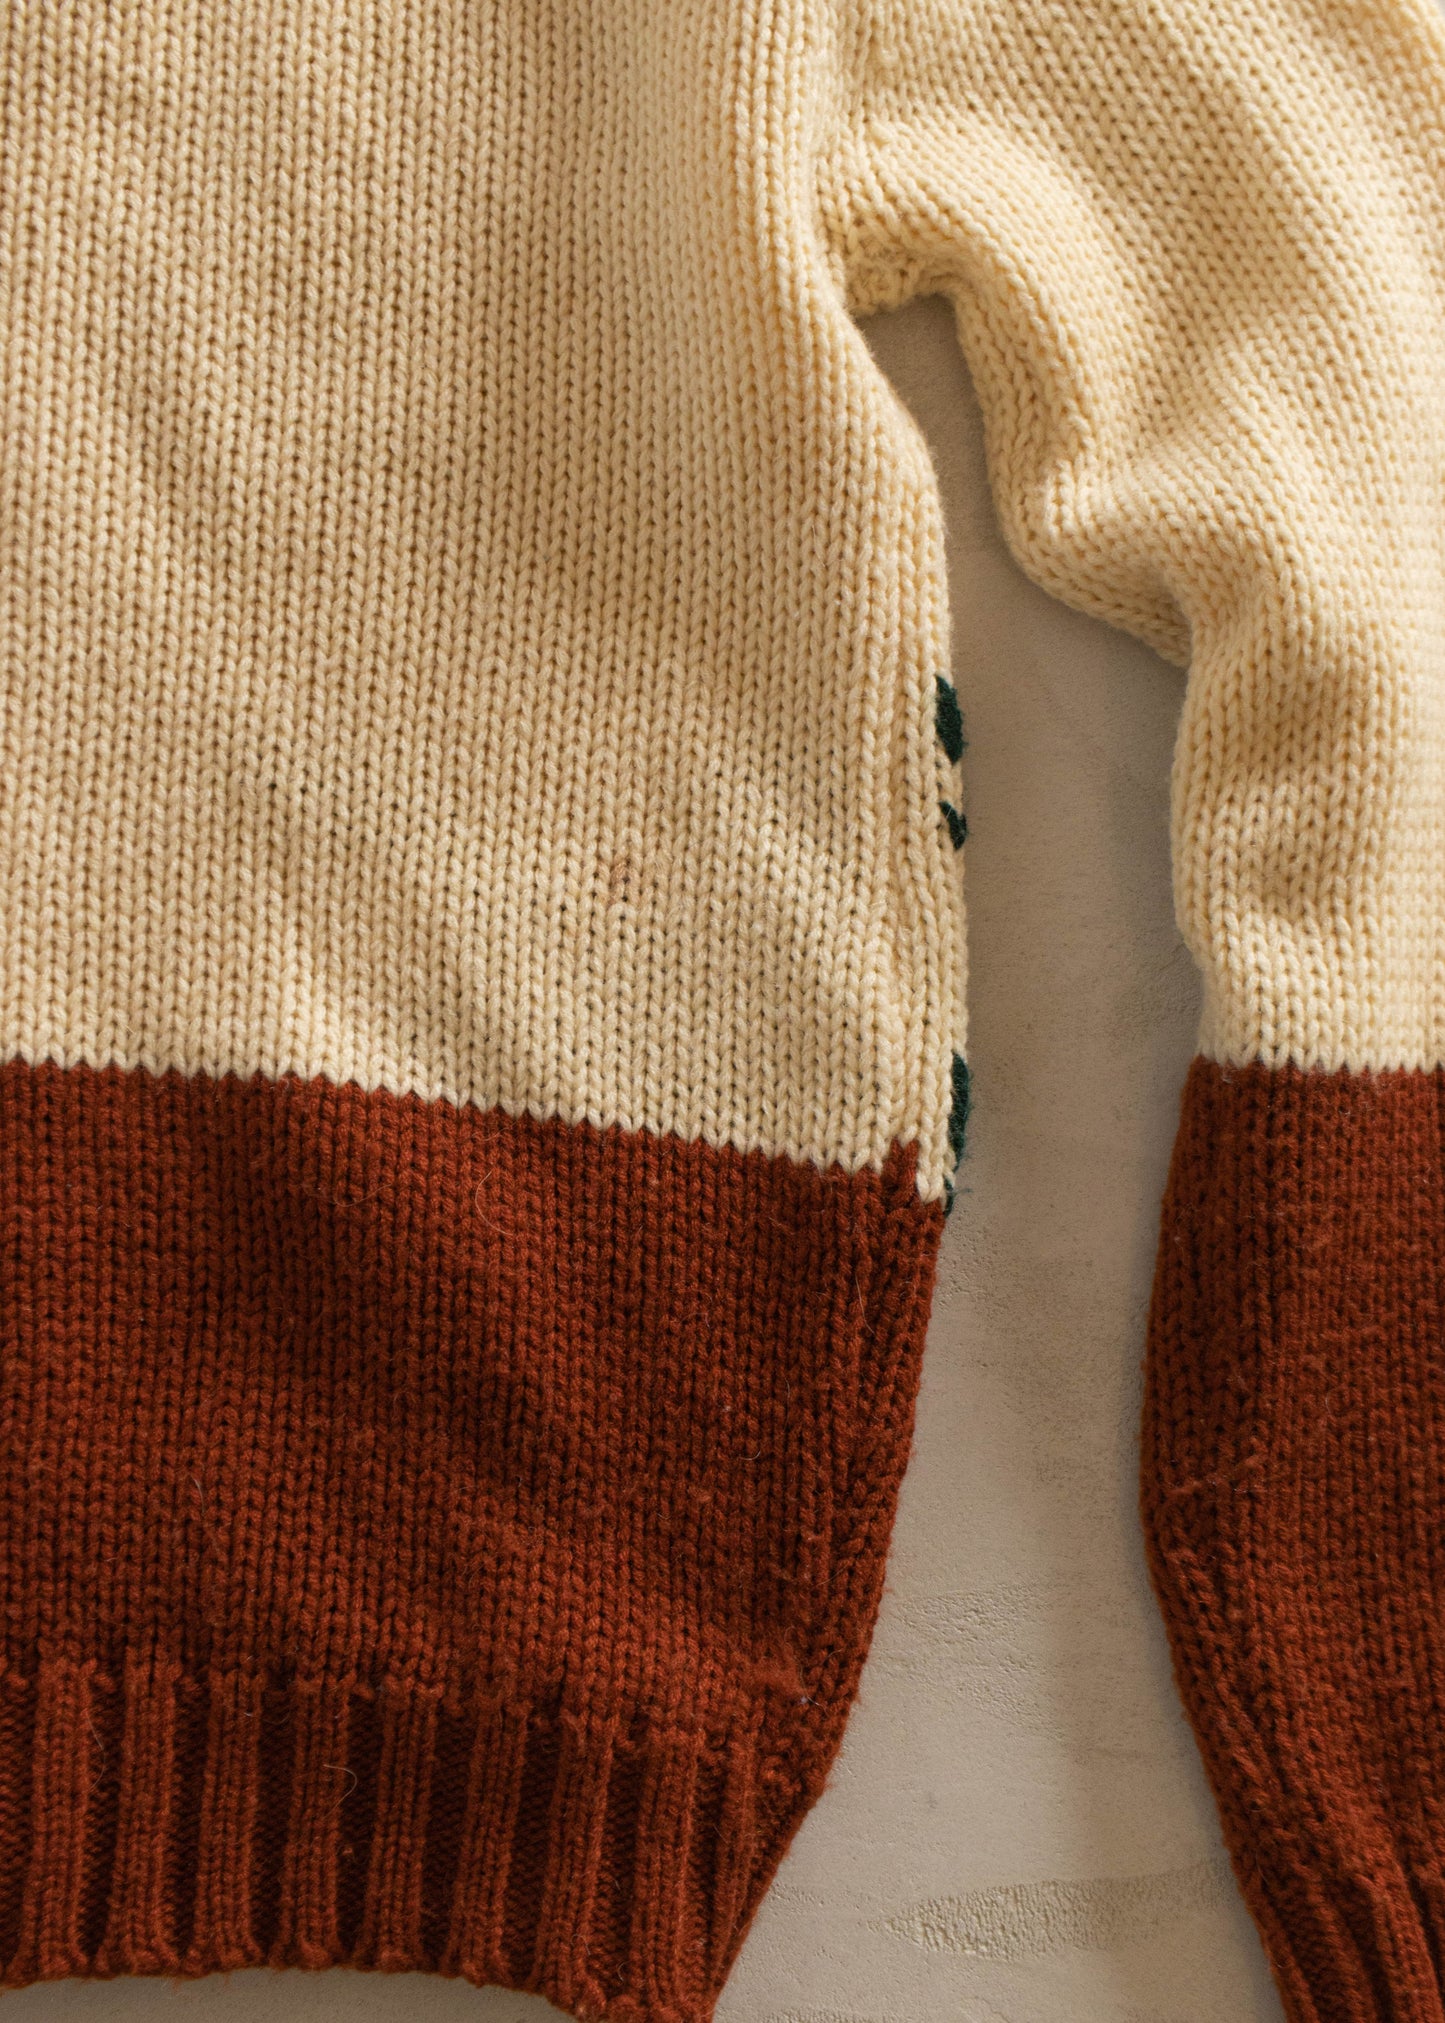 1980s Hunting Pattern Cowichan Style Wool Cardigan Size XS/S